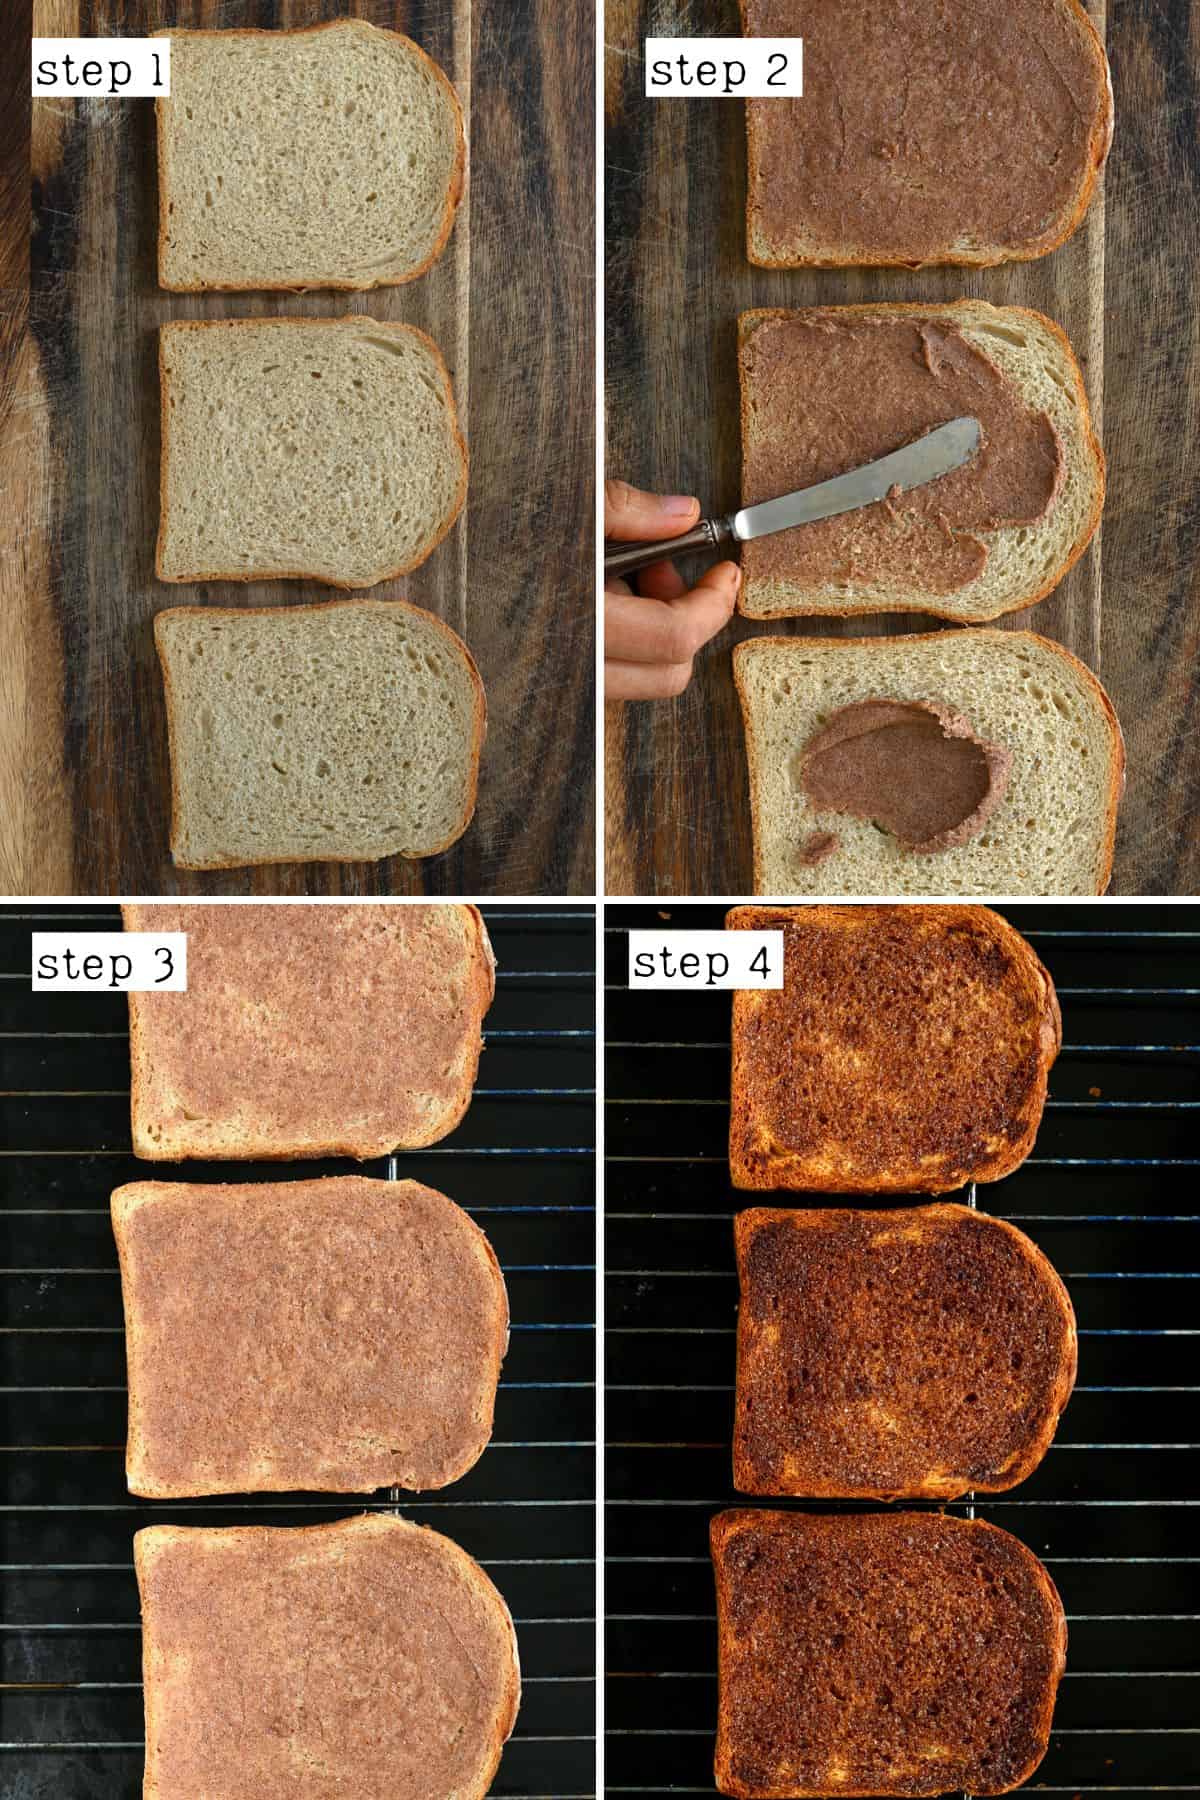 Steps for making cinnamon toast